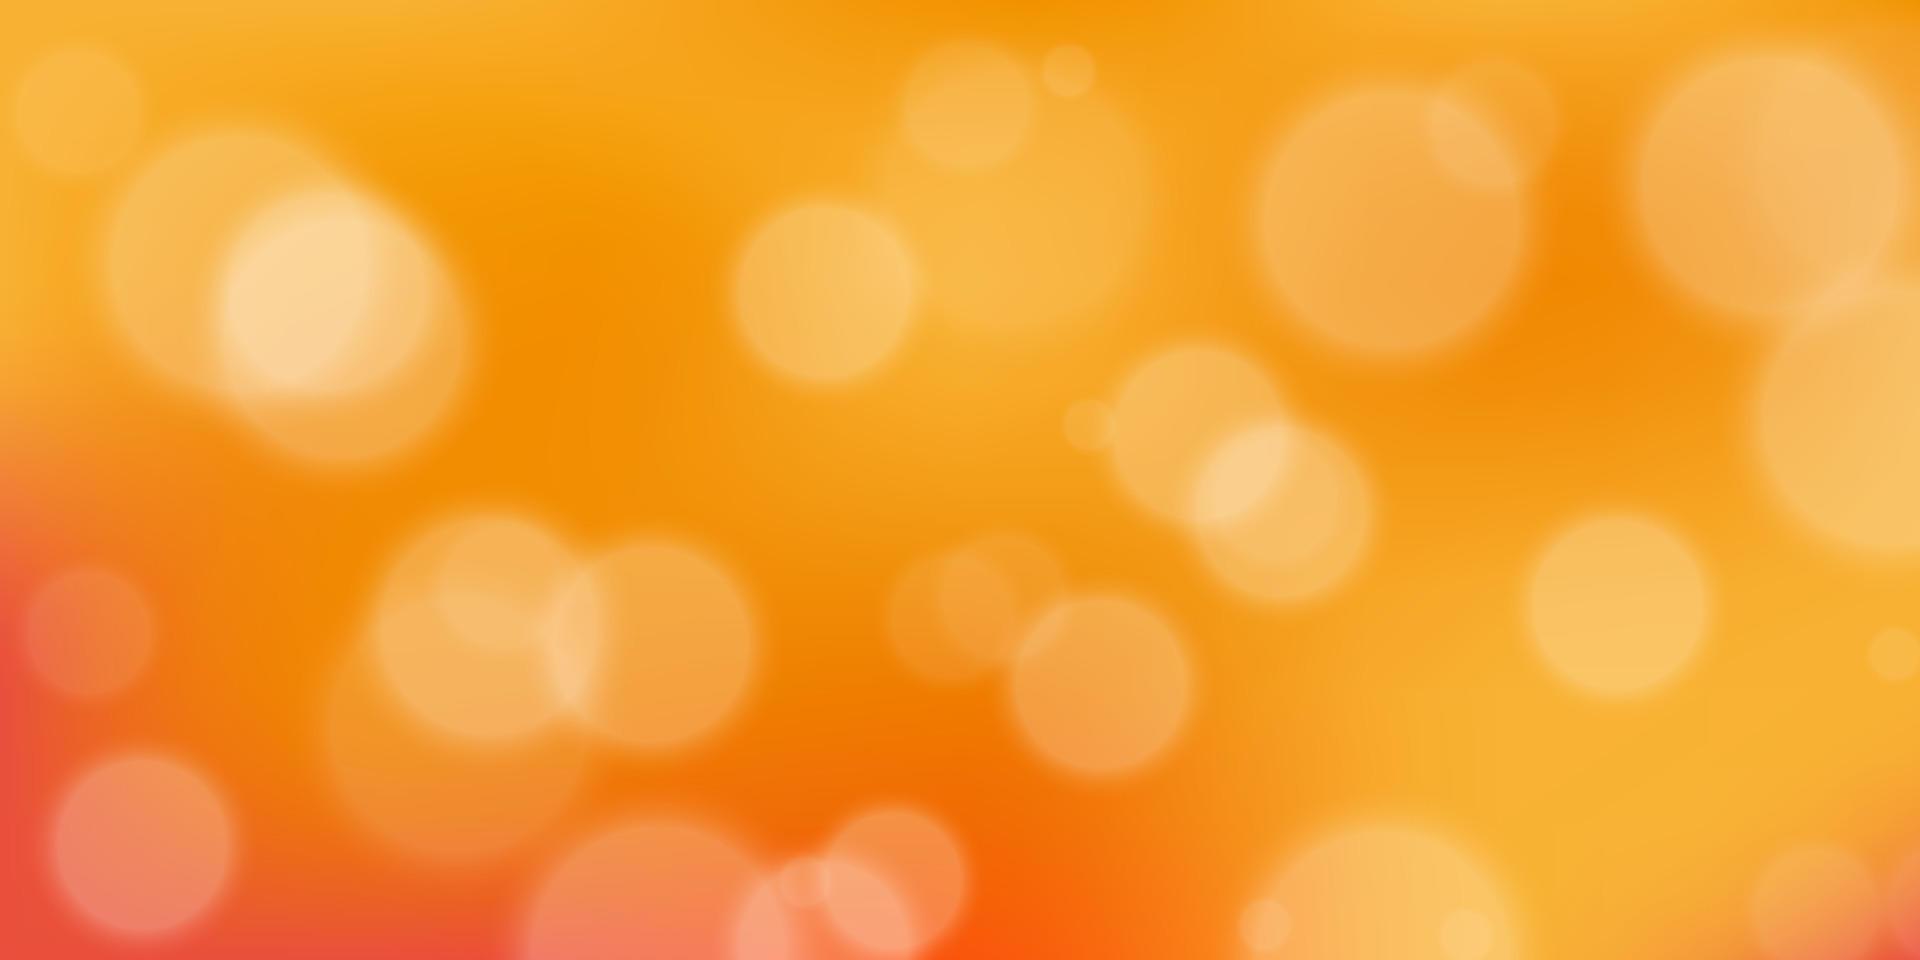 abstract orange bokeh background . vector illustration eps10